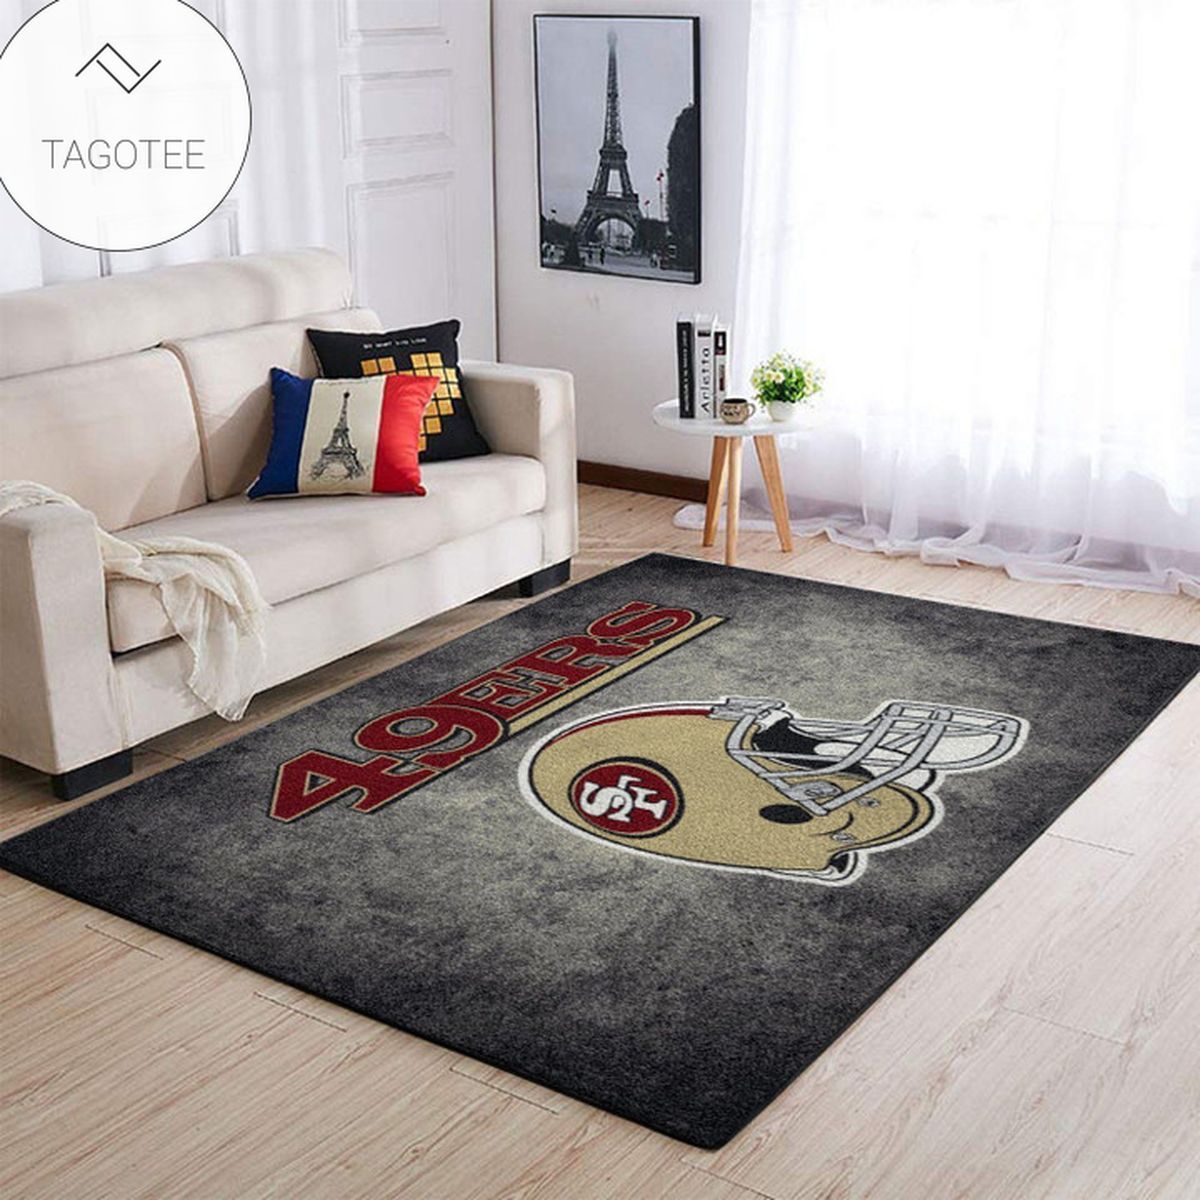 San Francisco 49ers Area Rug NFL Football Team Logo Carpet Living Room Rugs Floor Decor